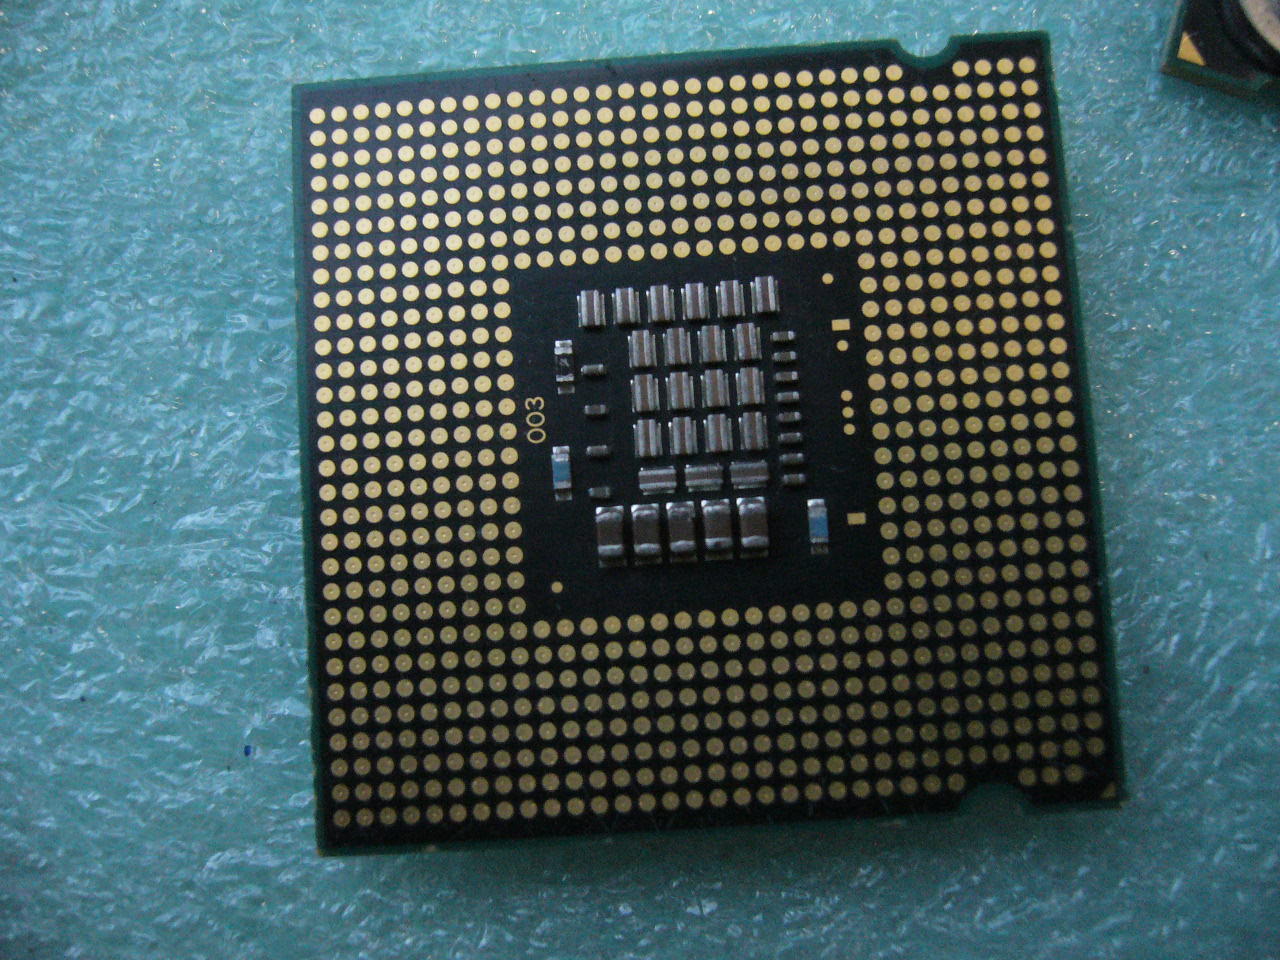 QTY 1x INTEL Core 2 Duo E8200 CPU 2.66GHz 6MB/1333Mhz LGA775 SLAPP - Click Image to Close